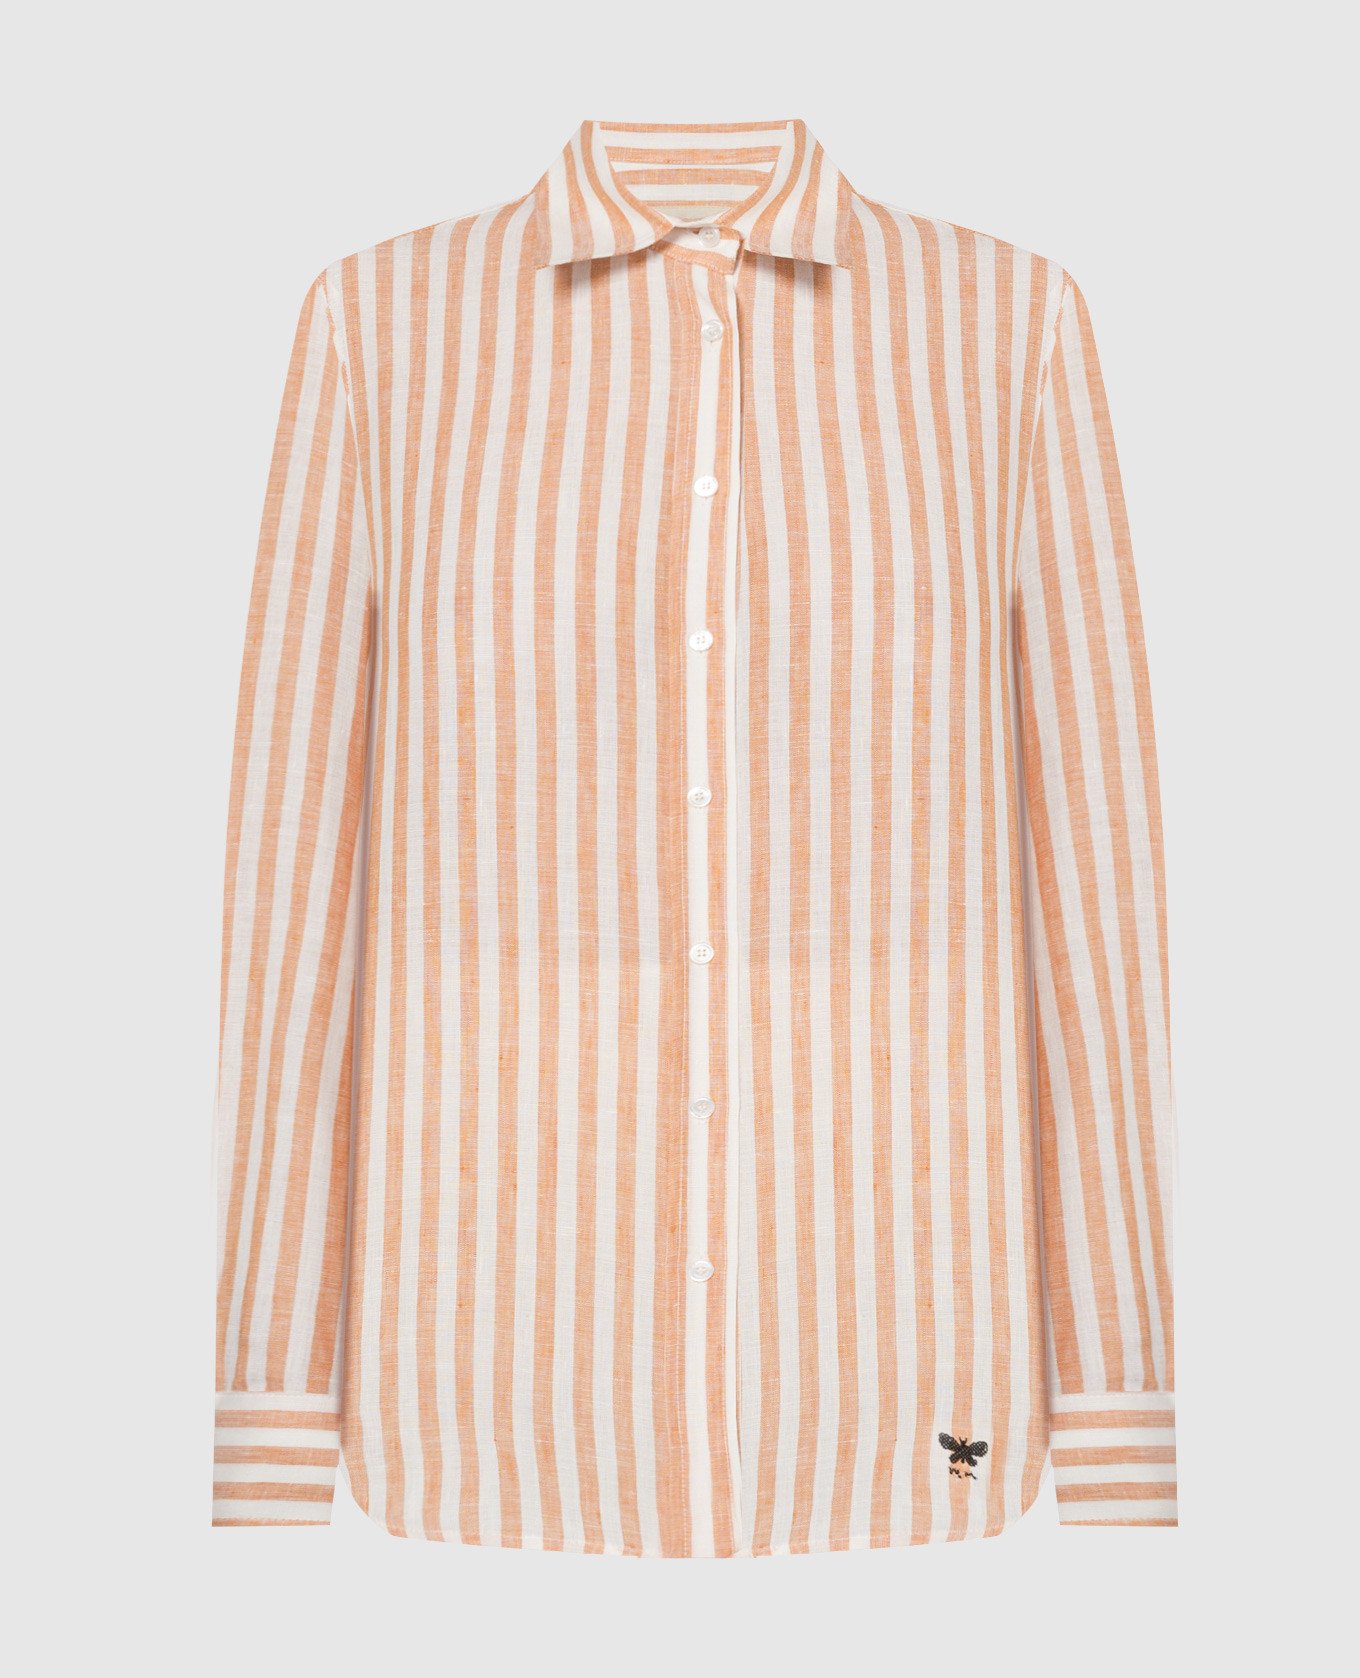 LARI orange striped linen shirt